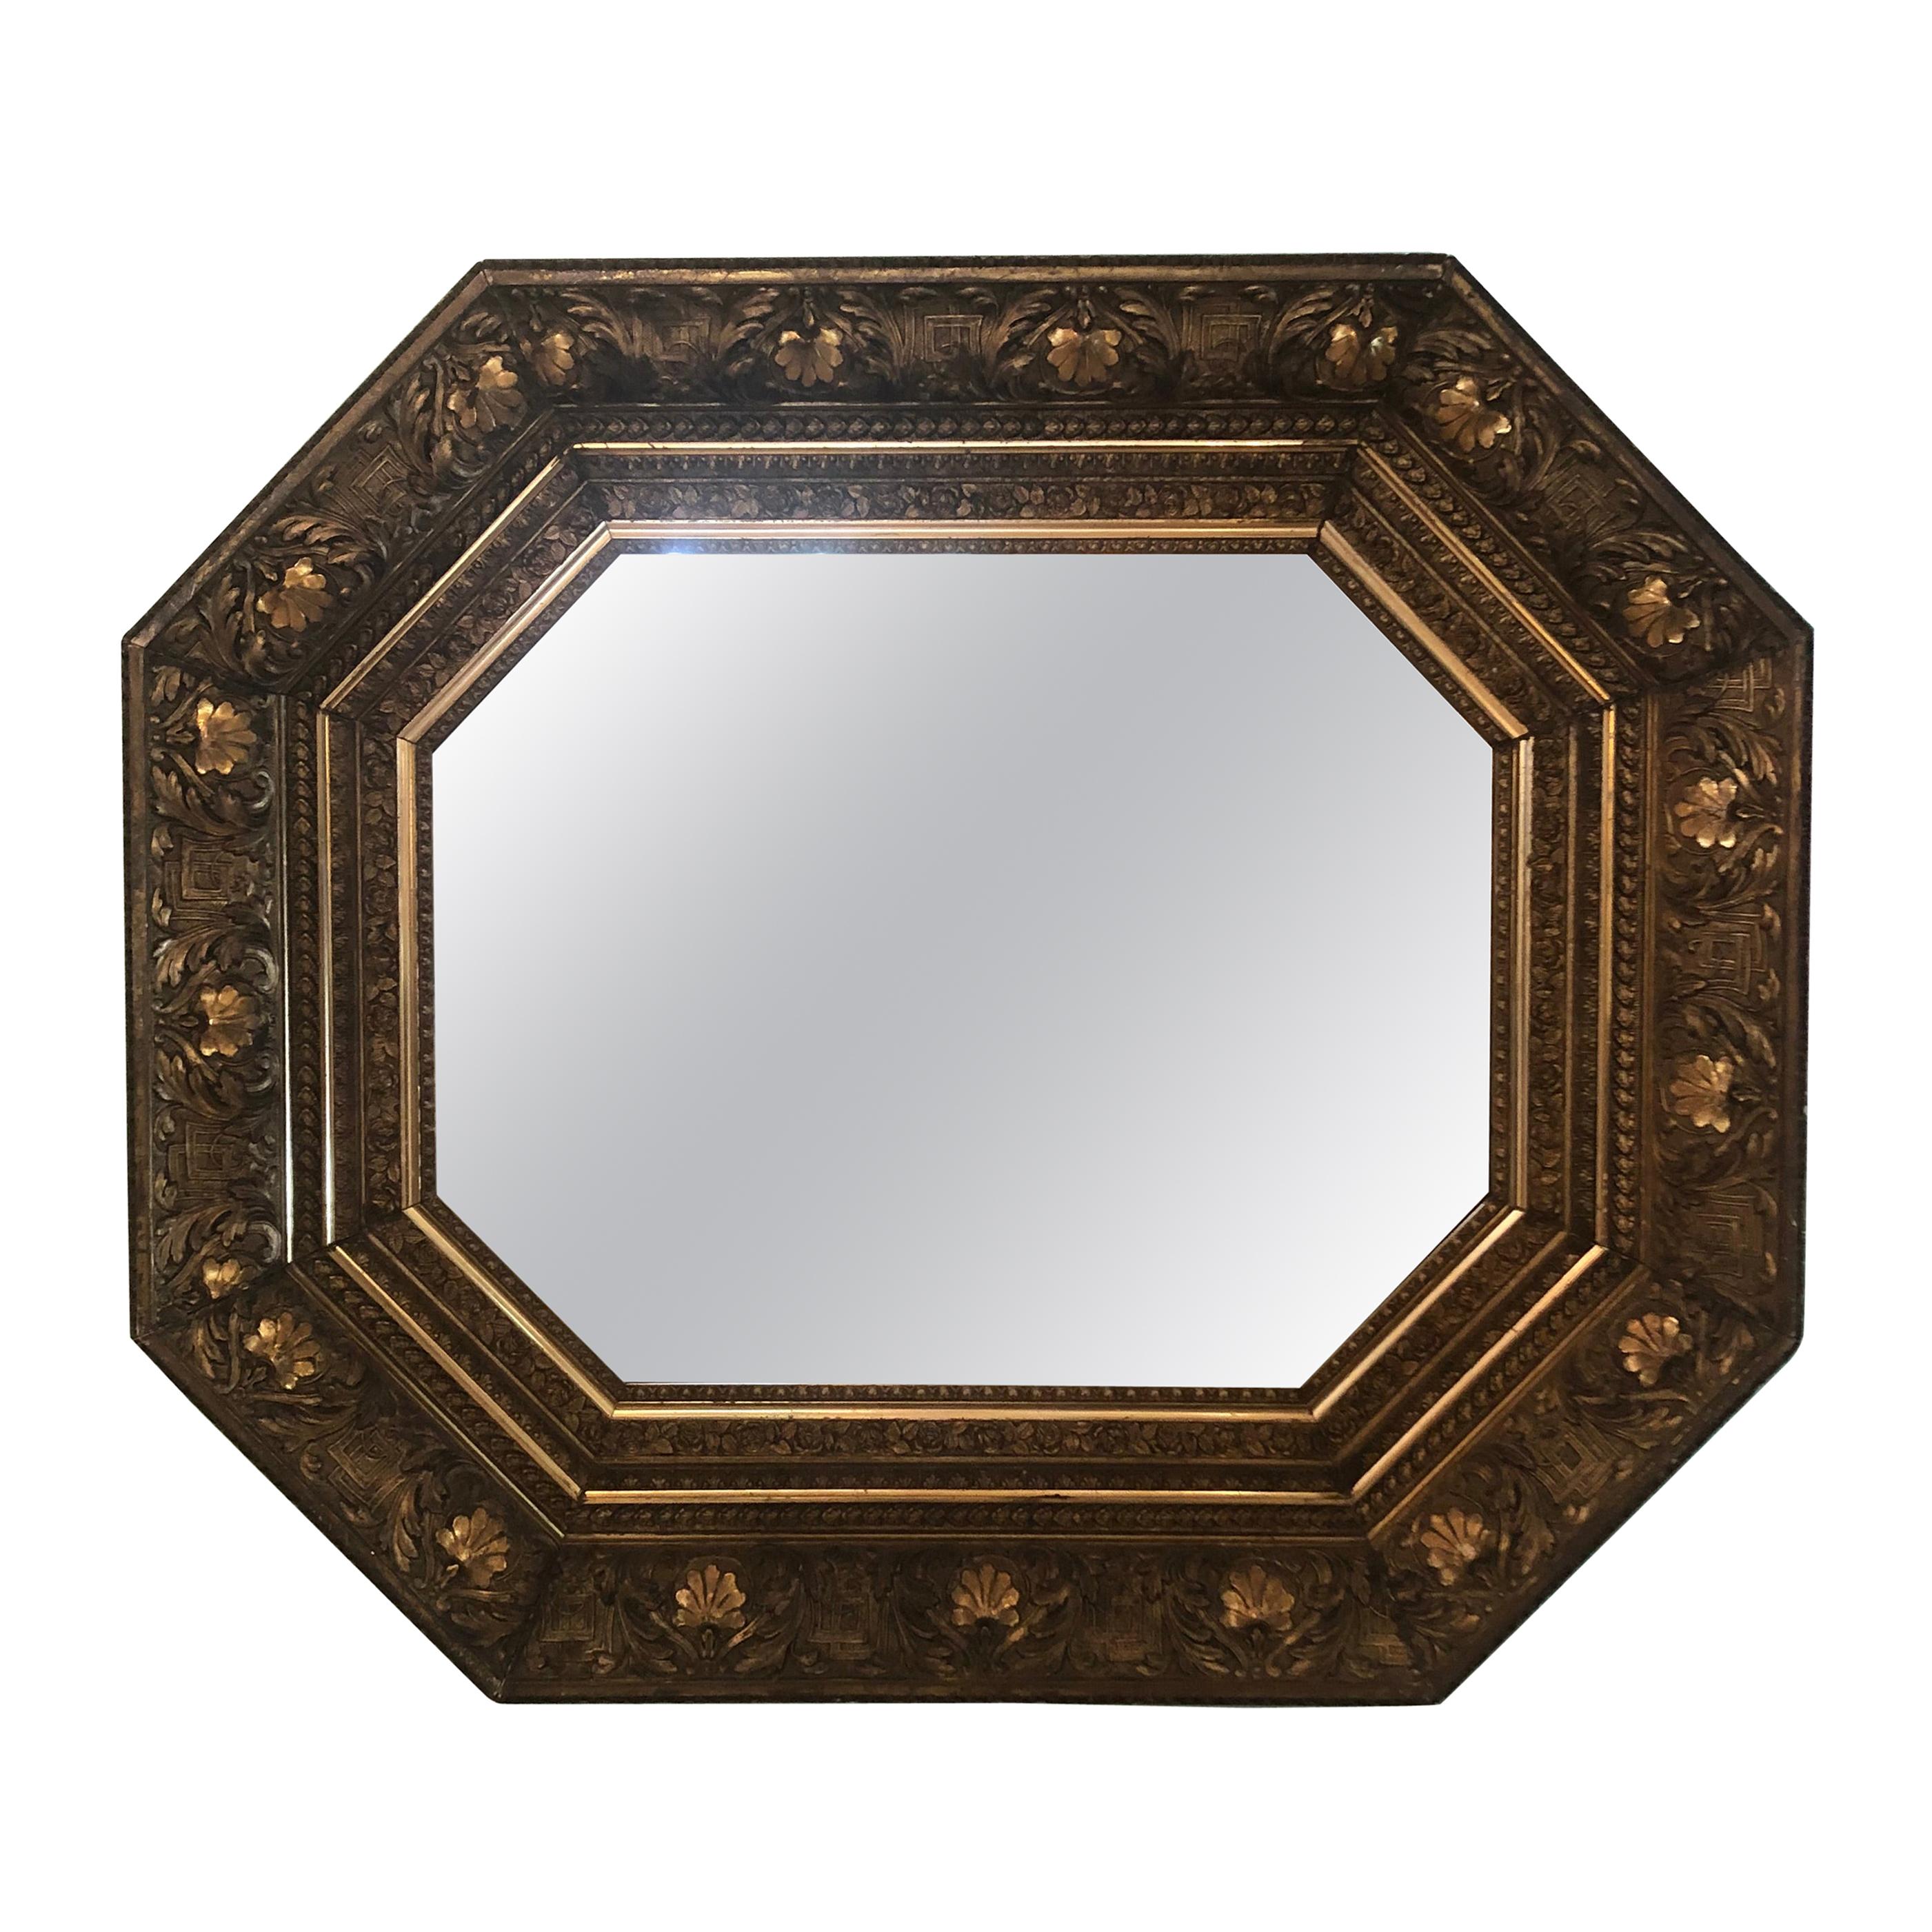 Sublime Ornate Antique Octagonal Giltwood Mirror